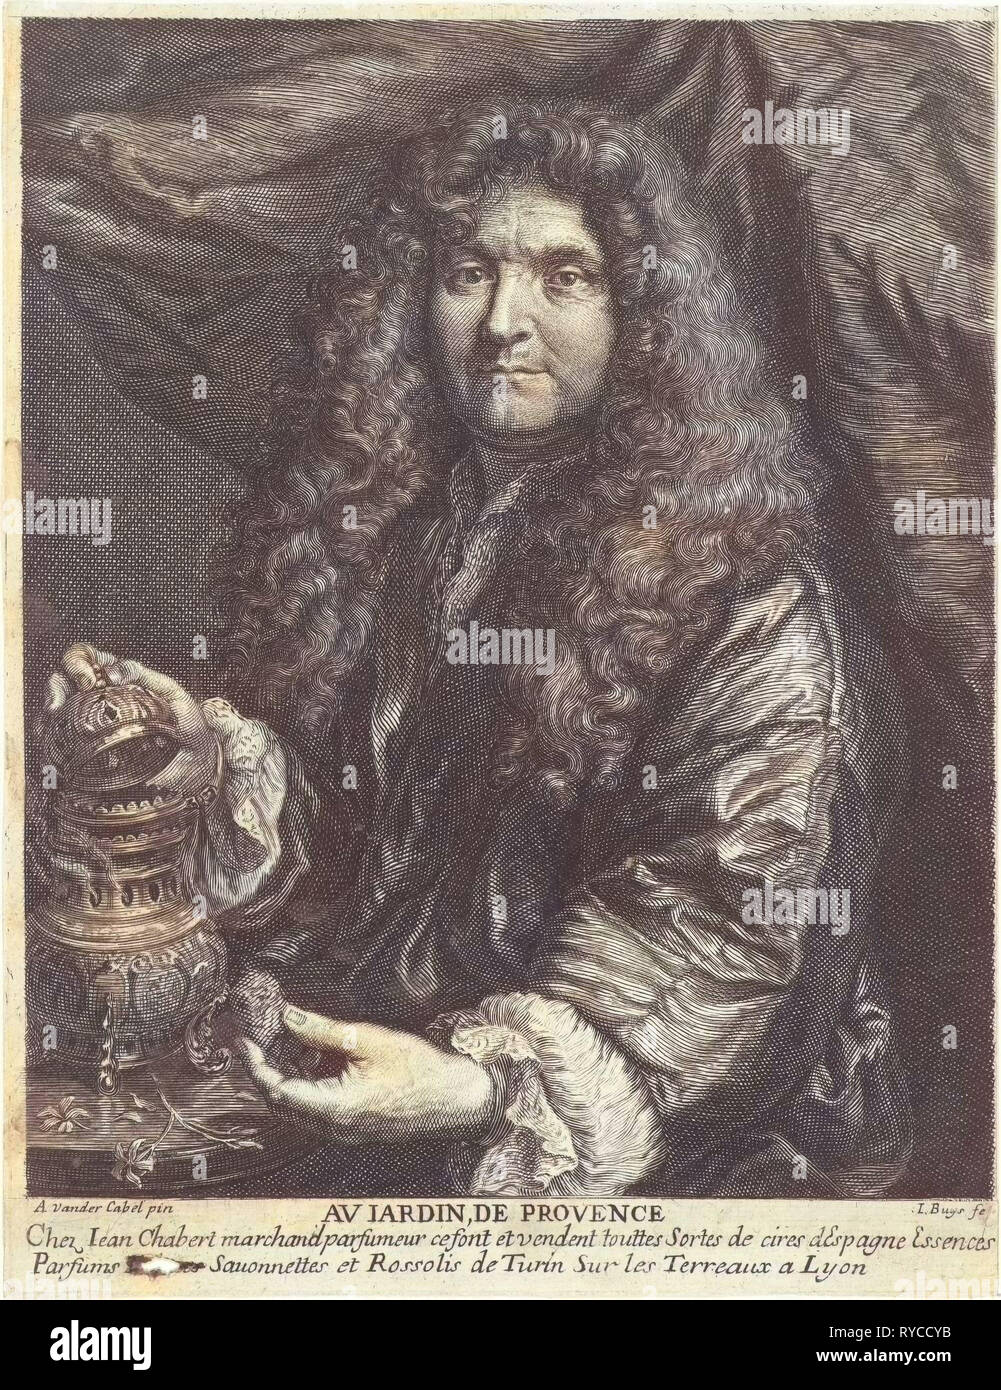 Portrait of the perfumer, Jean Chabert, Jacques Buys, c. 1675 - c. 1700  Stock Photo - Alamy